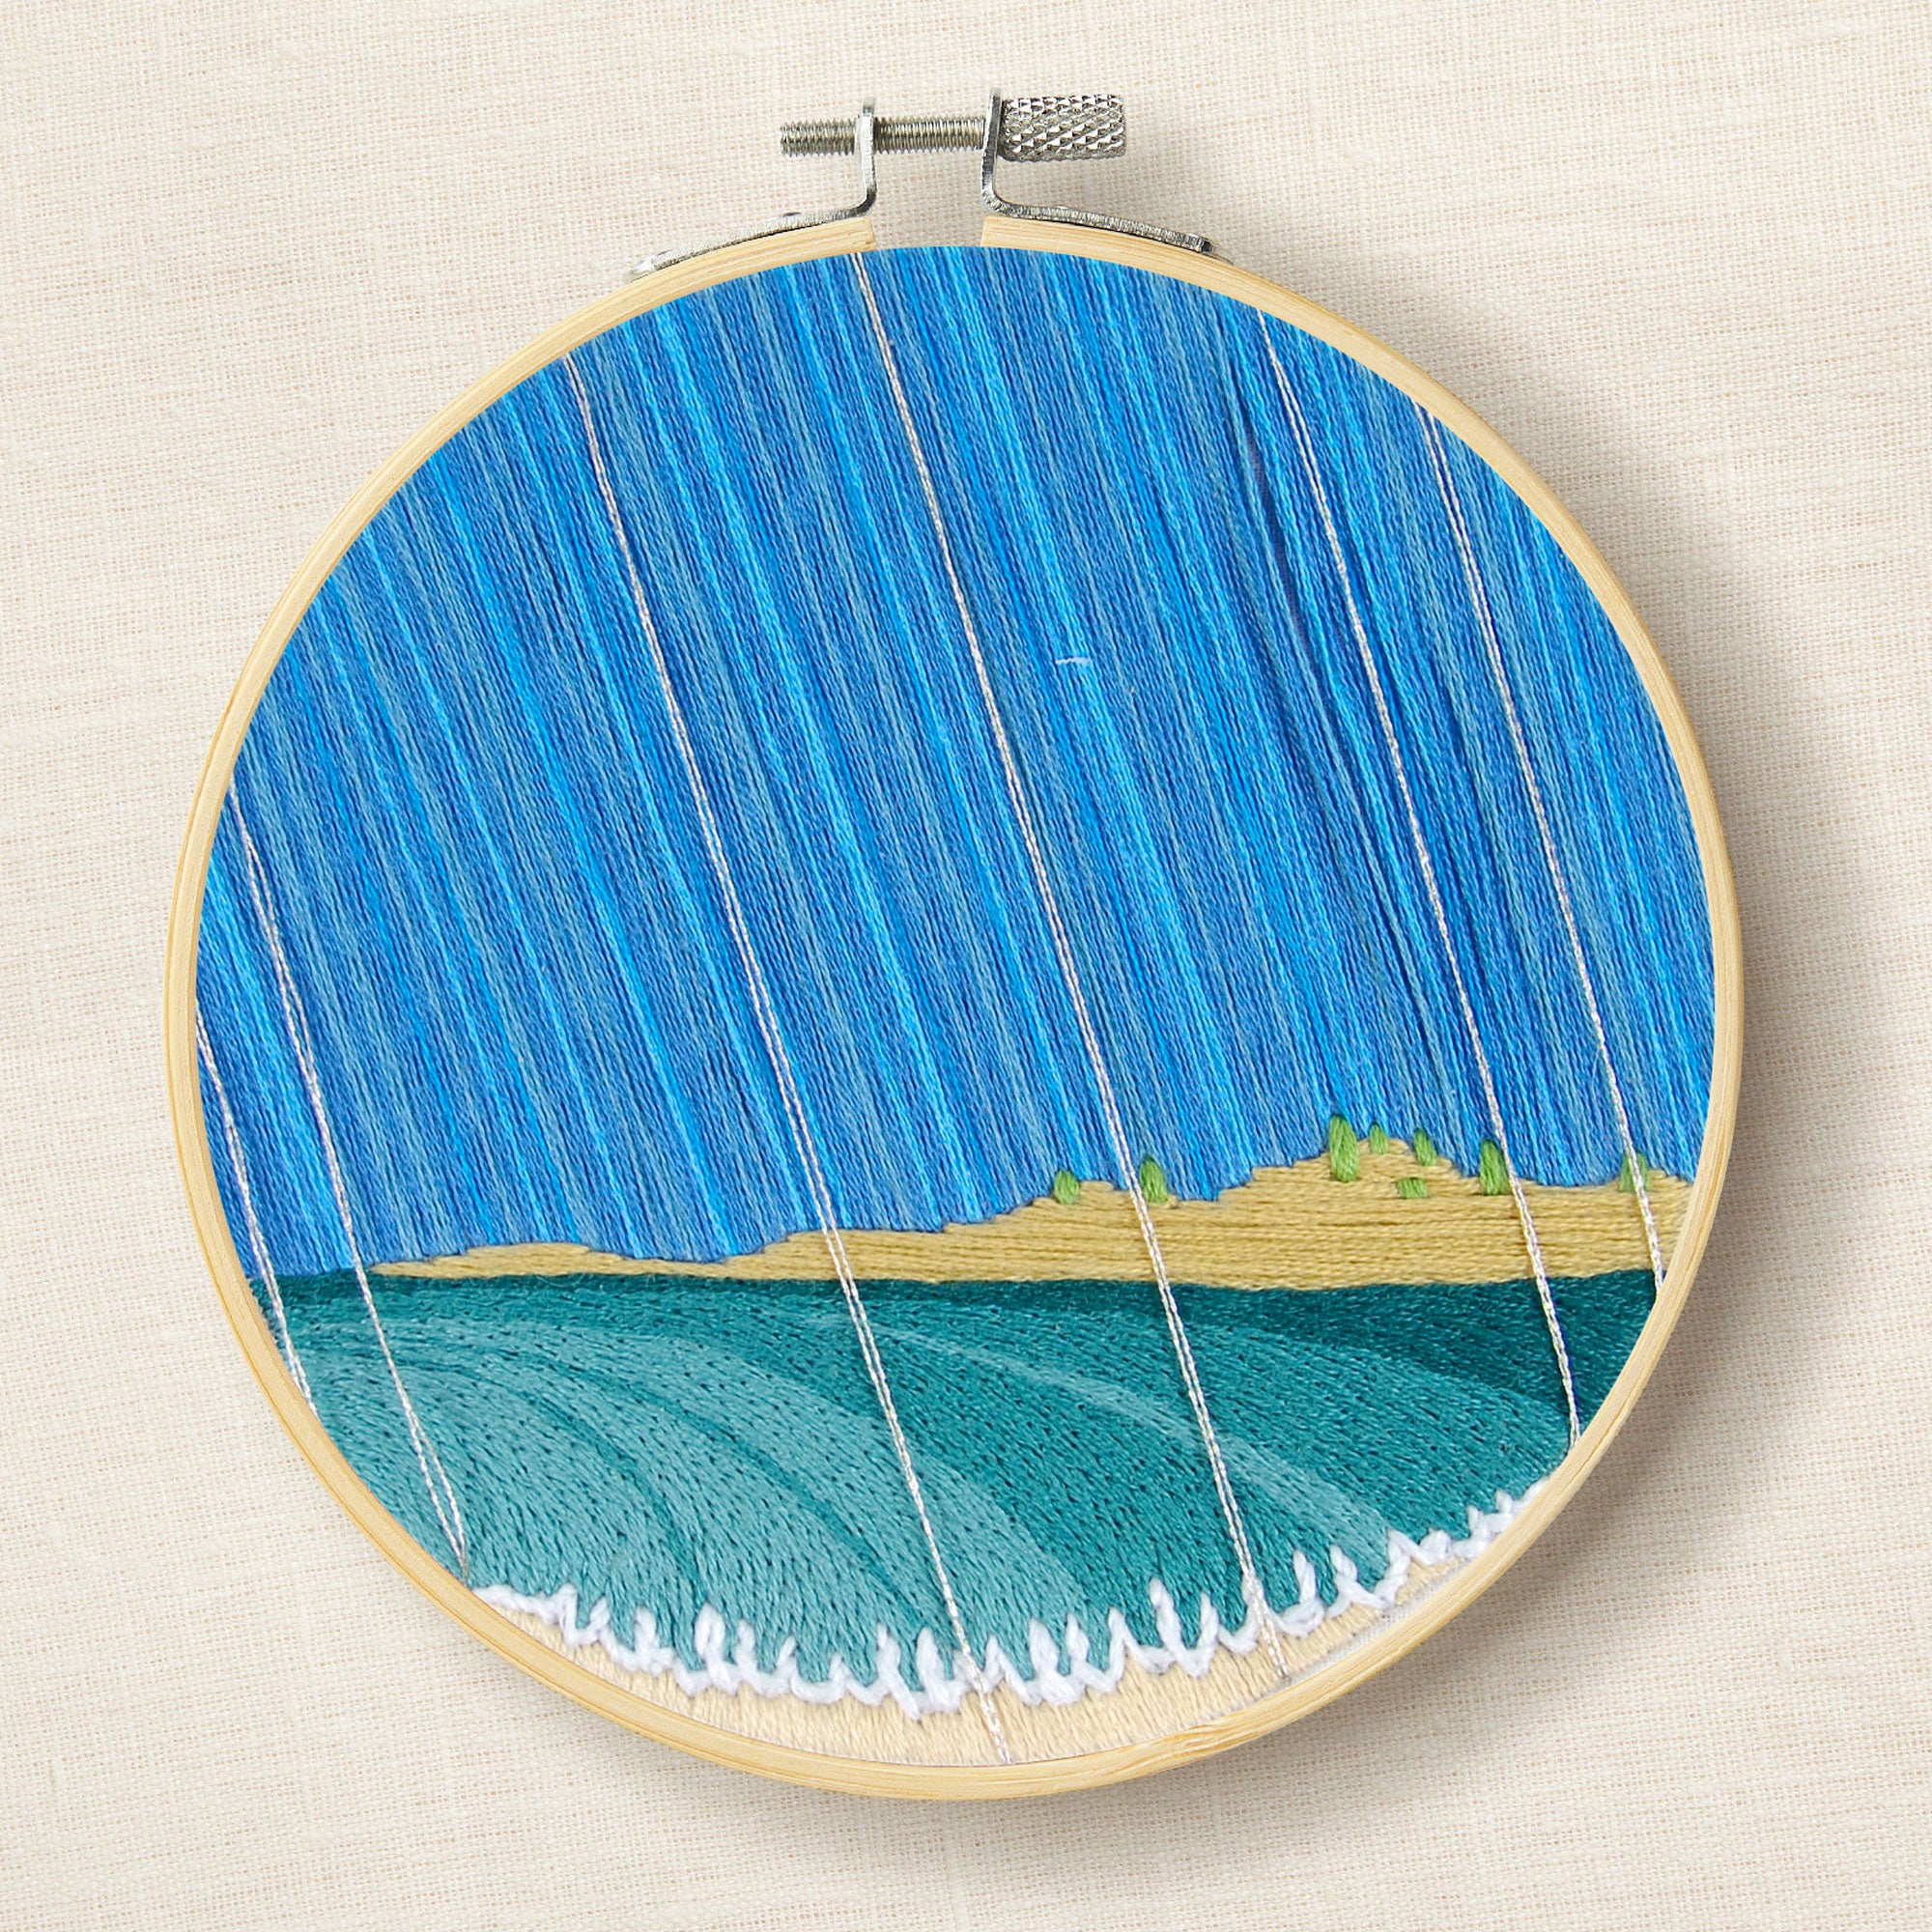 DMC Ocean Rain by Victoria Rose Richards (Embroidery Kit)